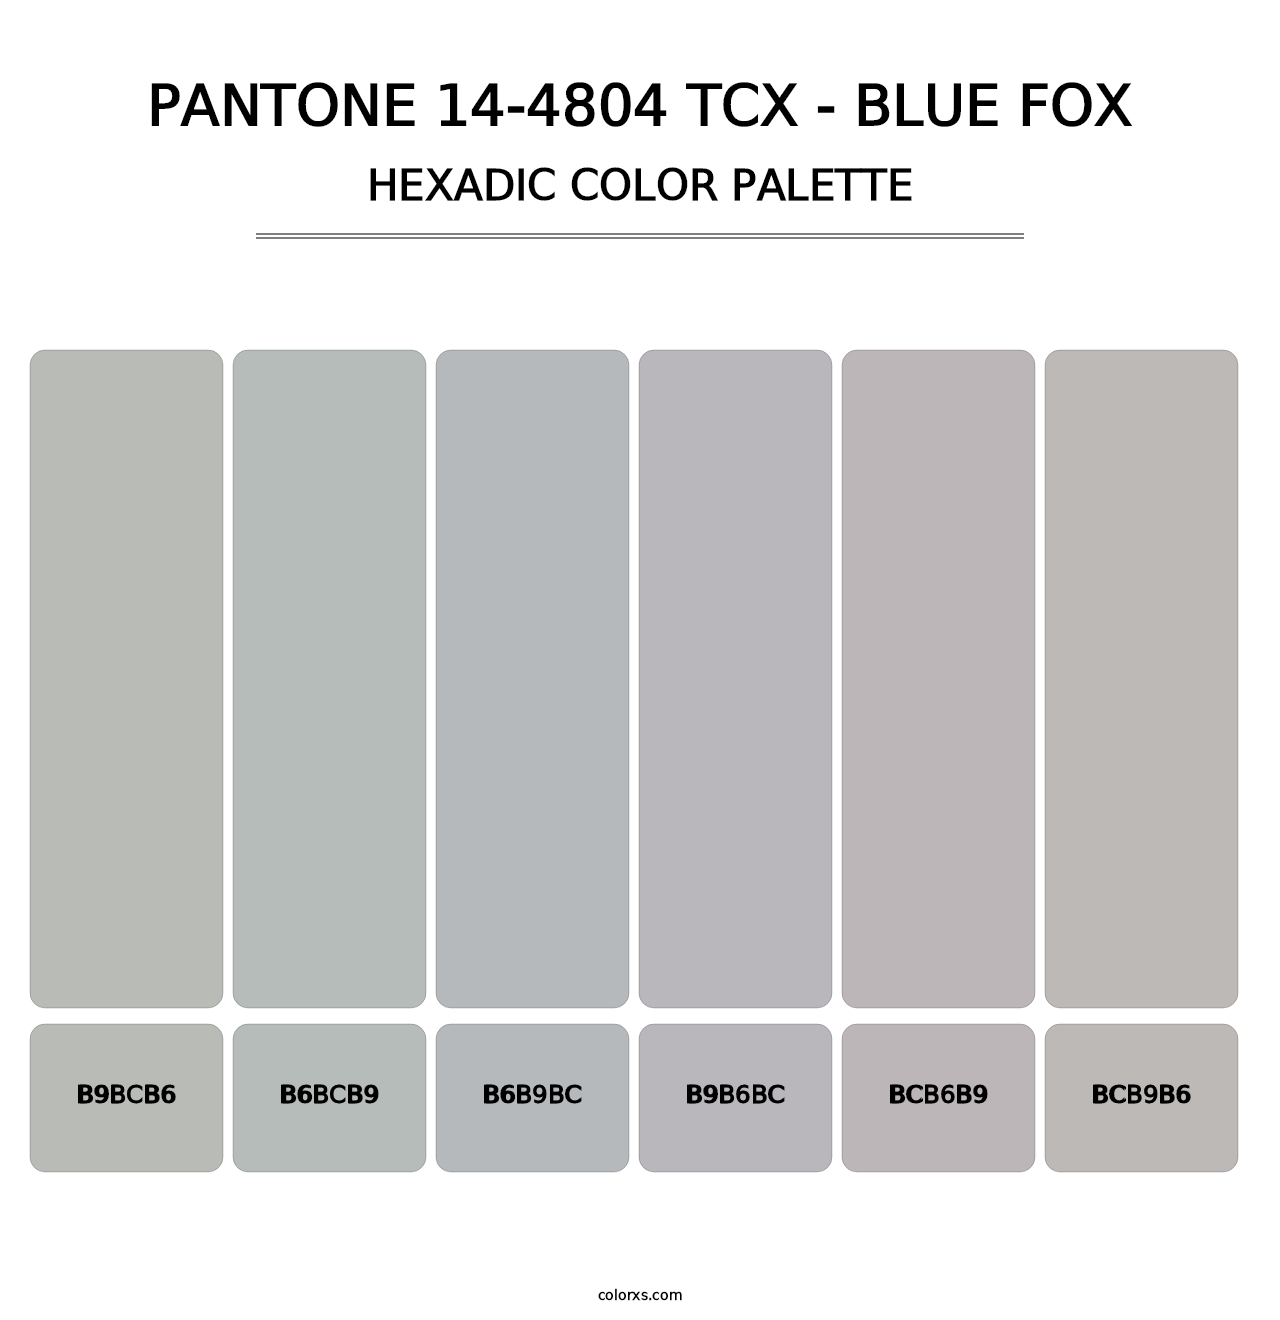 PANTONE 14-4804 TCX - Blue Fox - Hexadic Color Palette